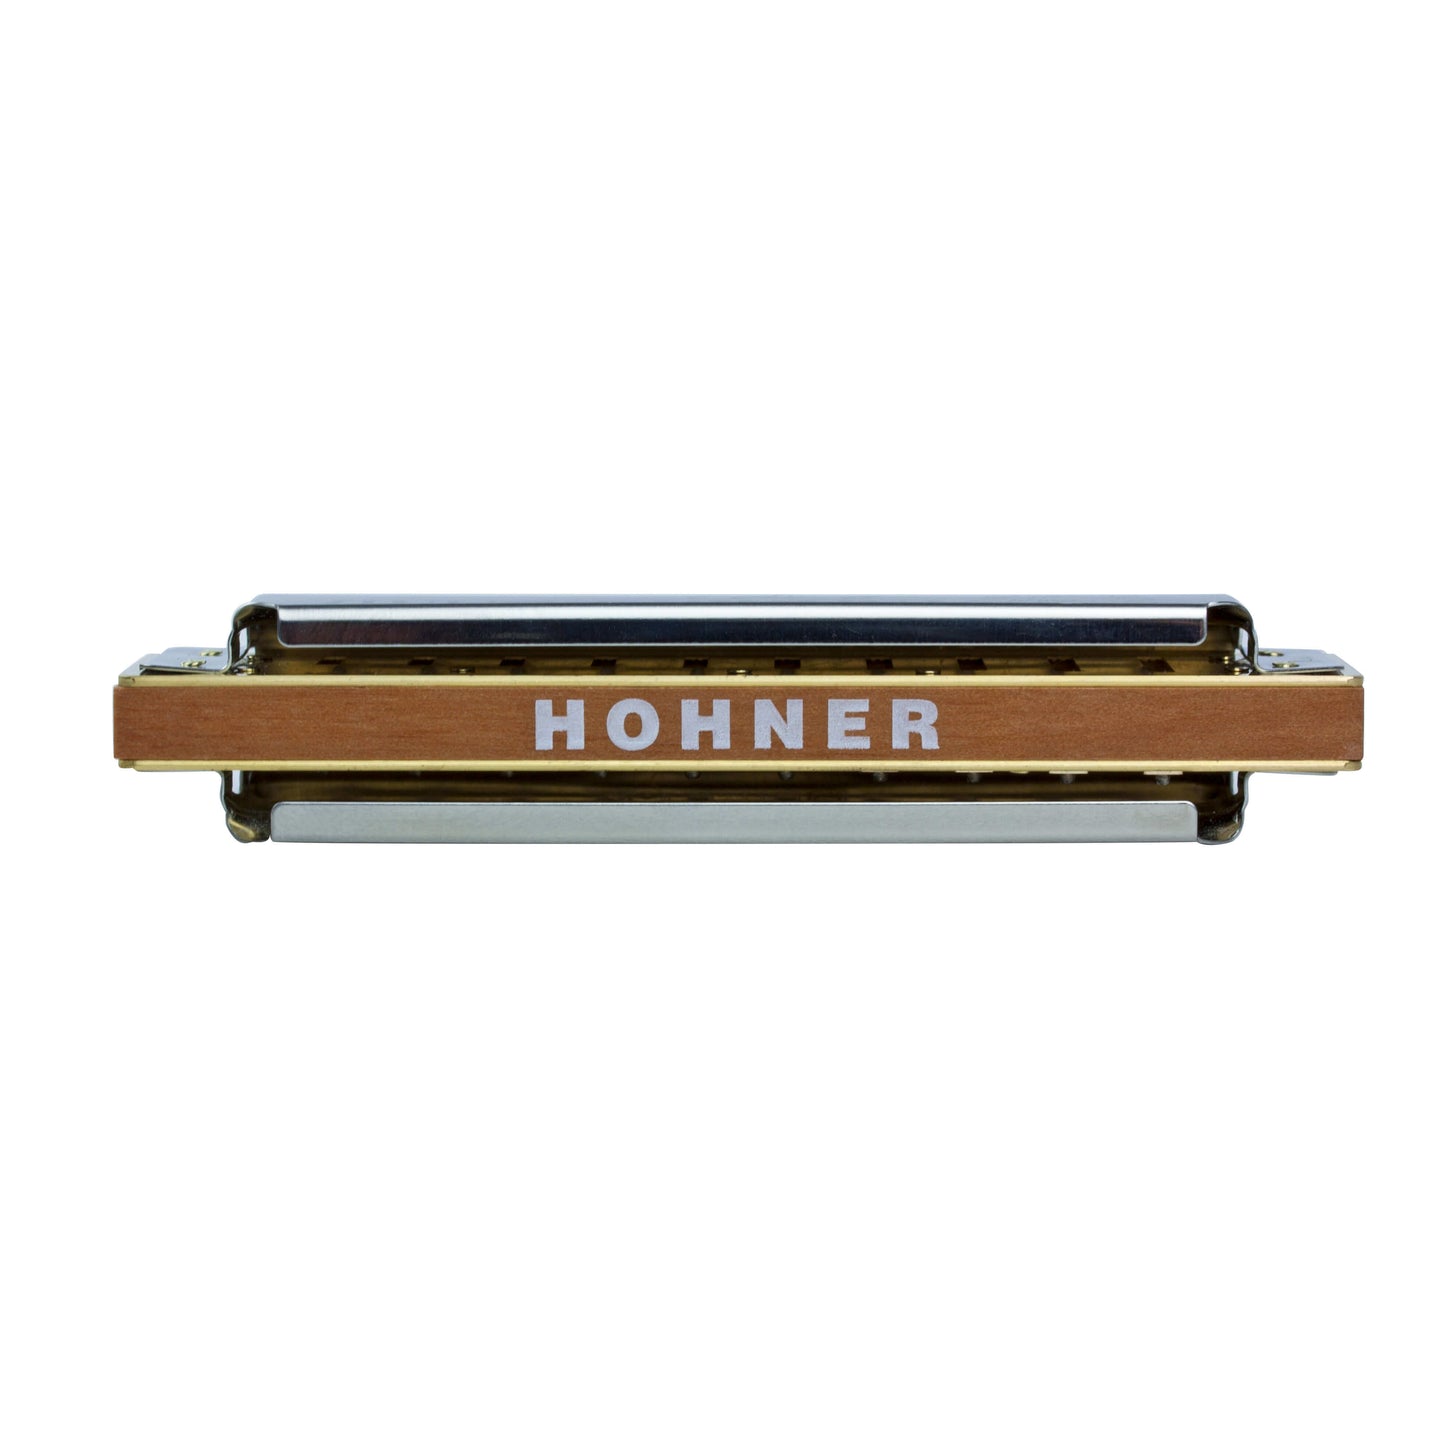 Hohner Marine Band 1896 Classic Harmonica, Key of A